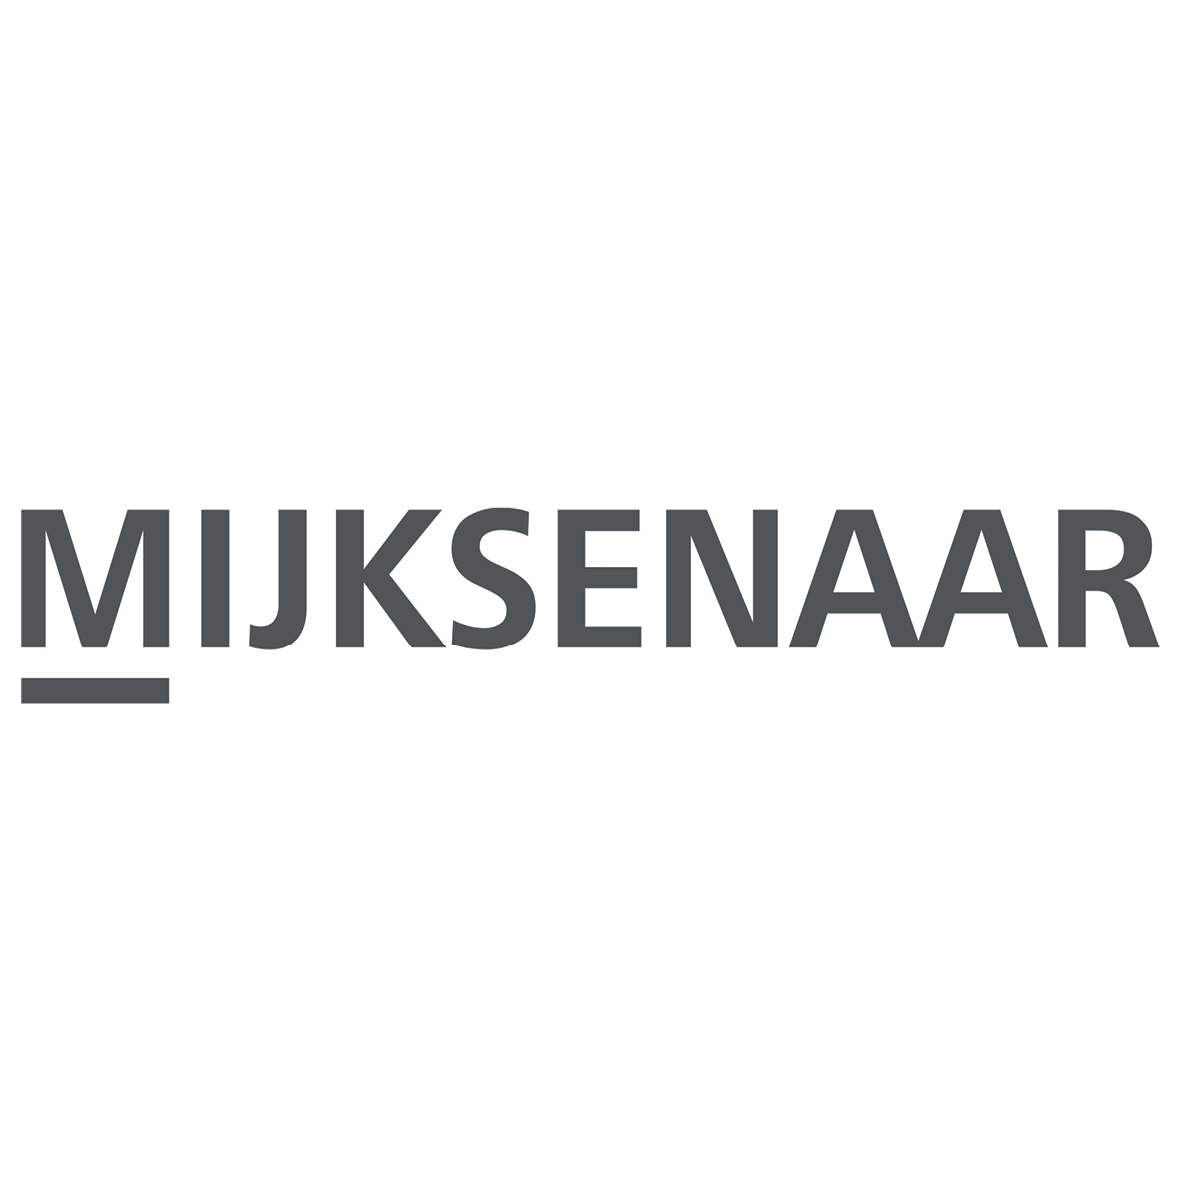 Company logo of Mijksenaar